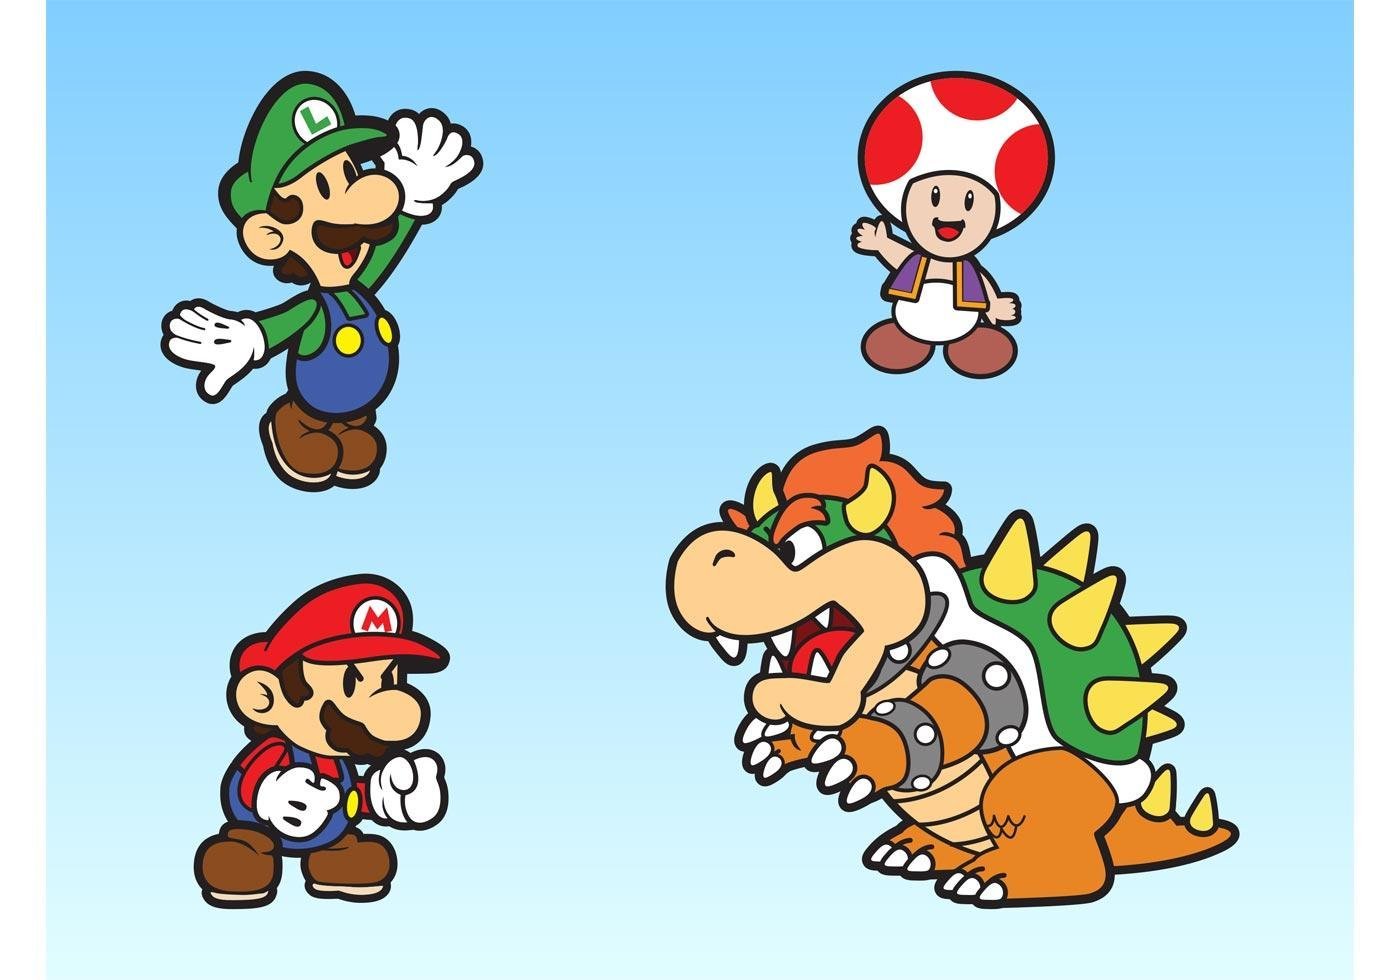 Super mario bros game. Марио персонажи. Игры super Mario Bros. Марио Денди персонажи. Супер Марио БРОС Марио.